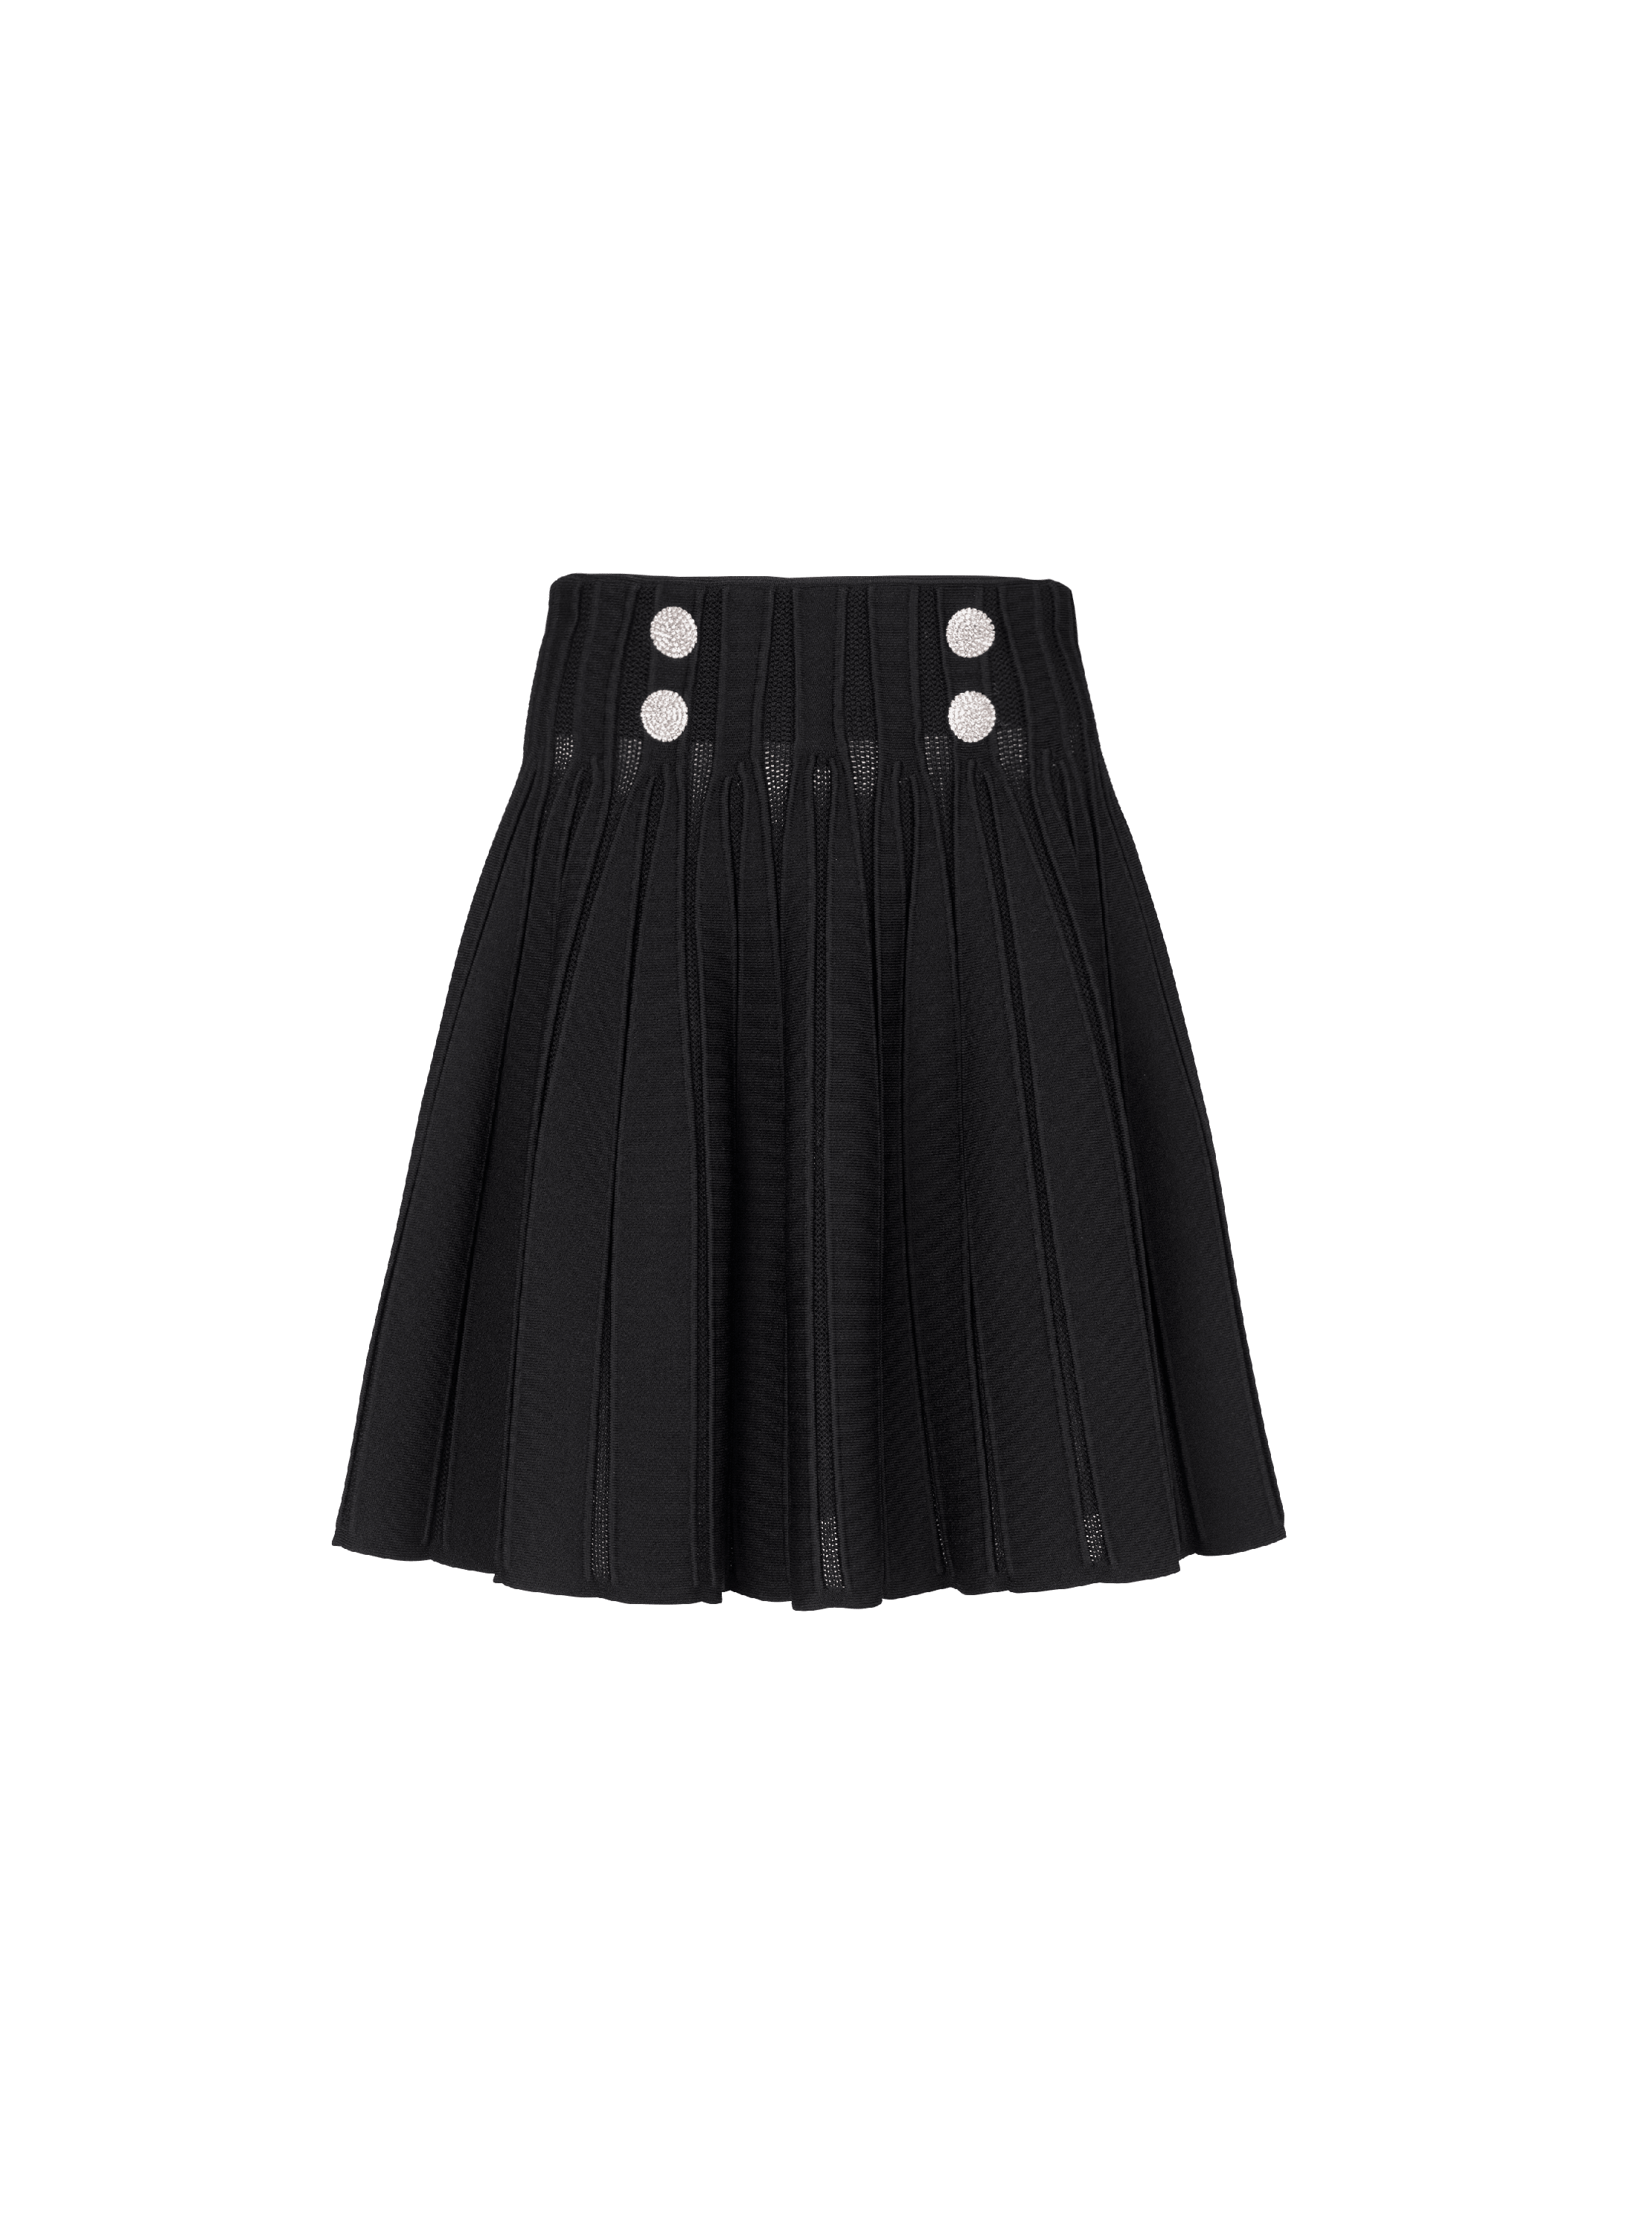 Ribbed knit skater skirt, black, hi-res